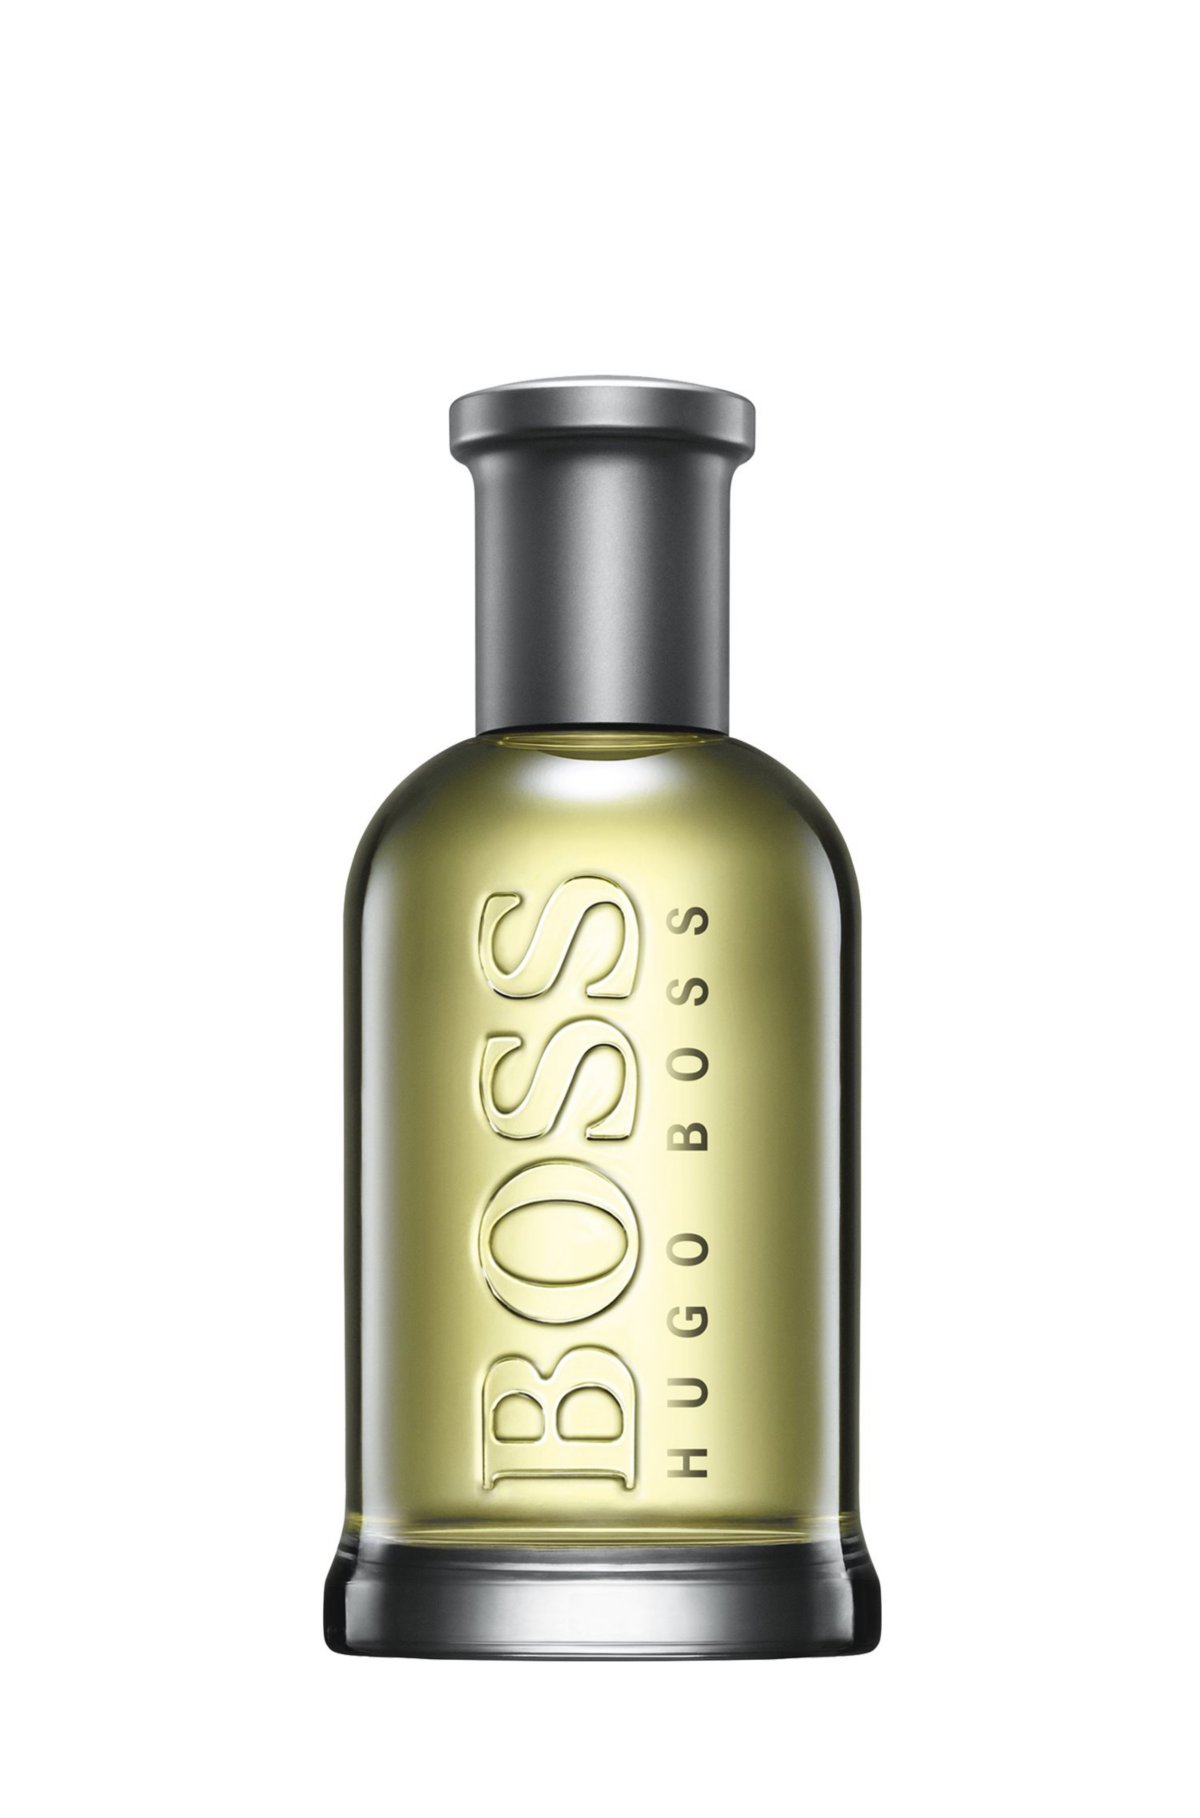 BOSS - Bottled aftershave 100ml